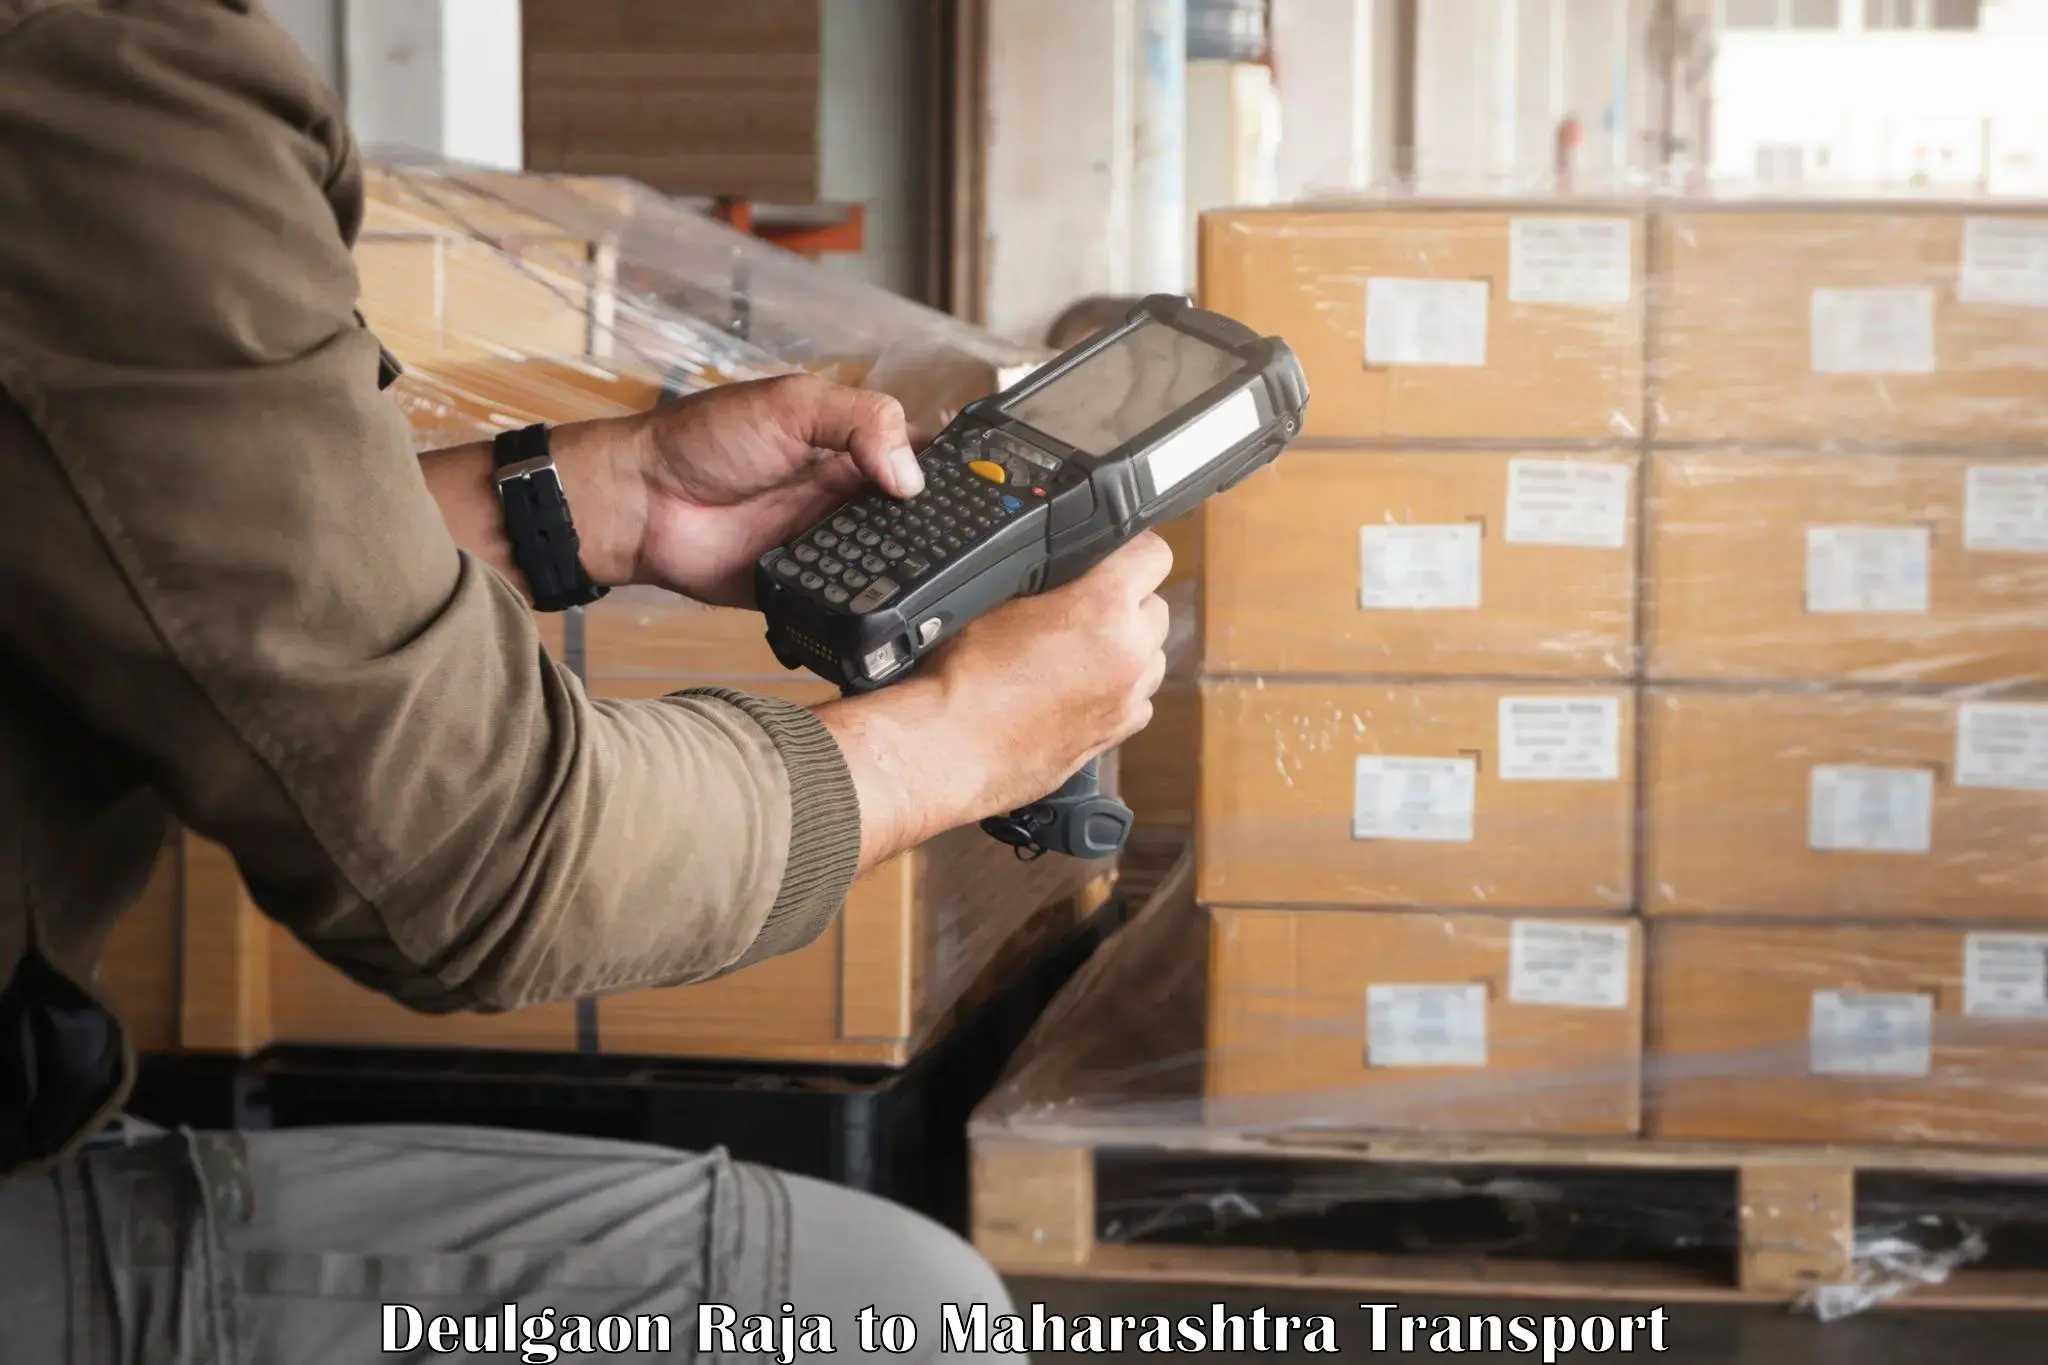 Lorry transport service Deulgaon Raja to Bhandara